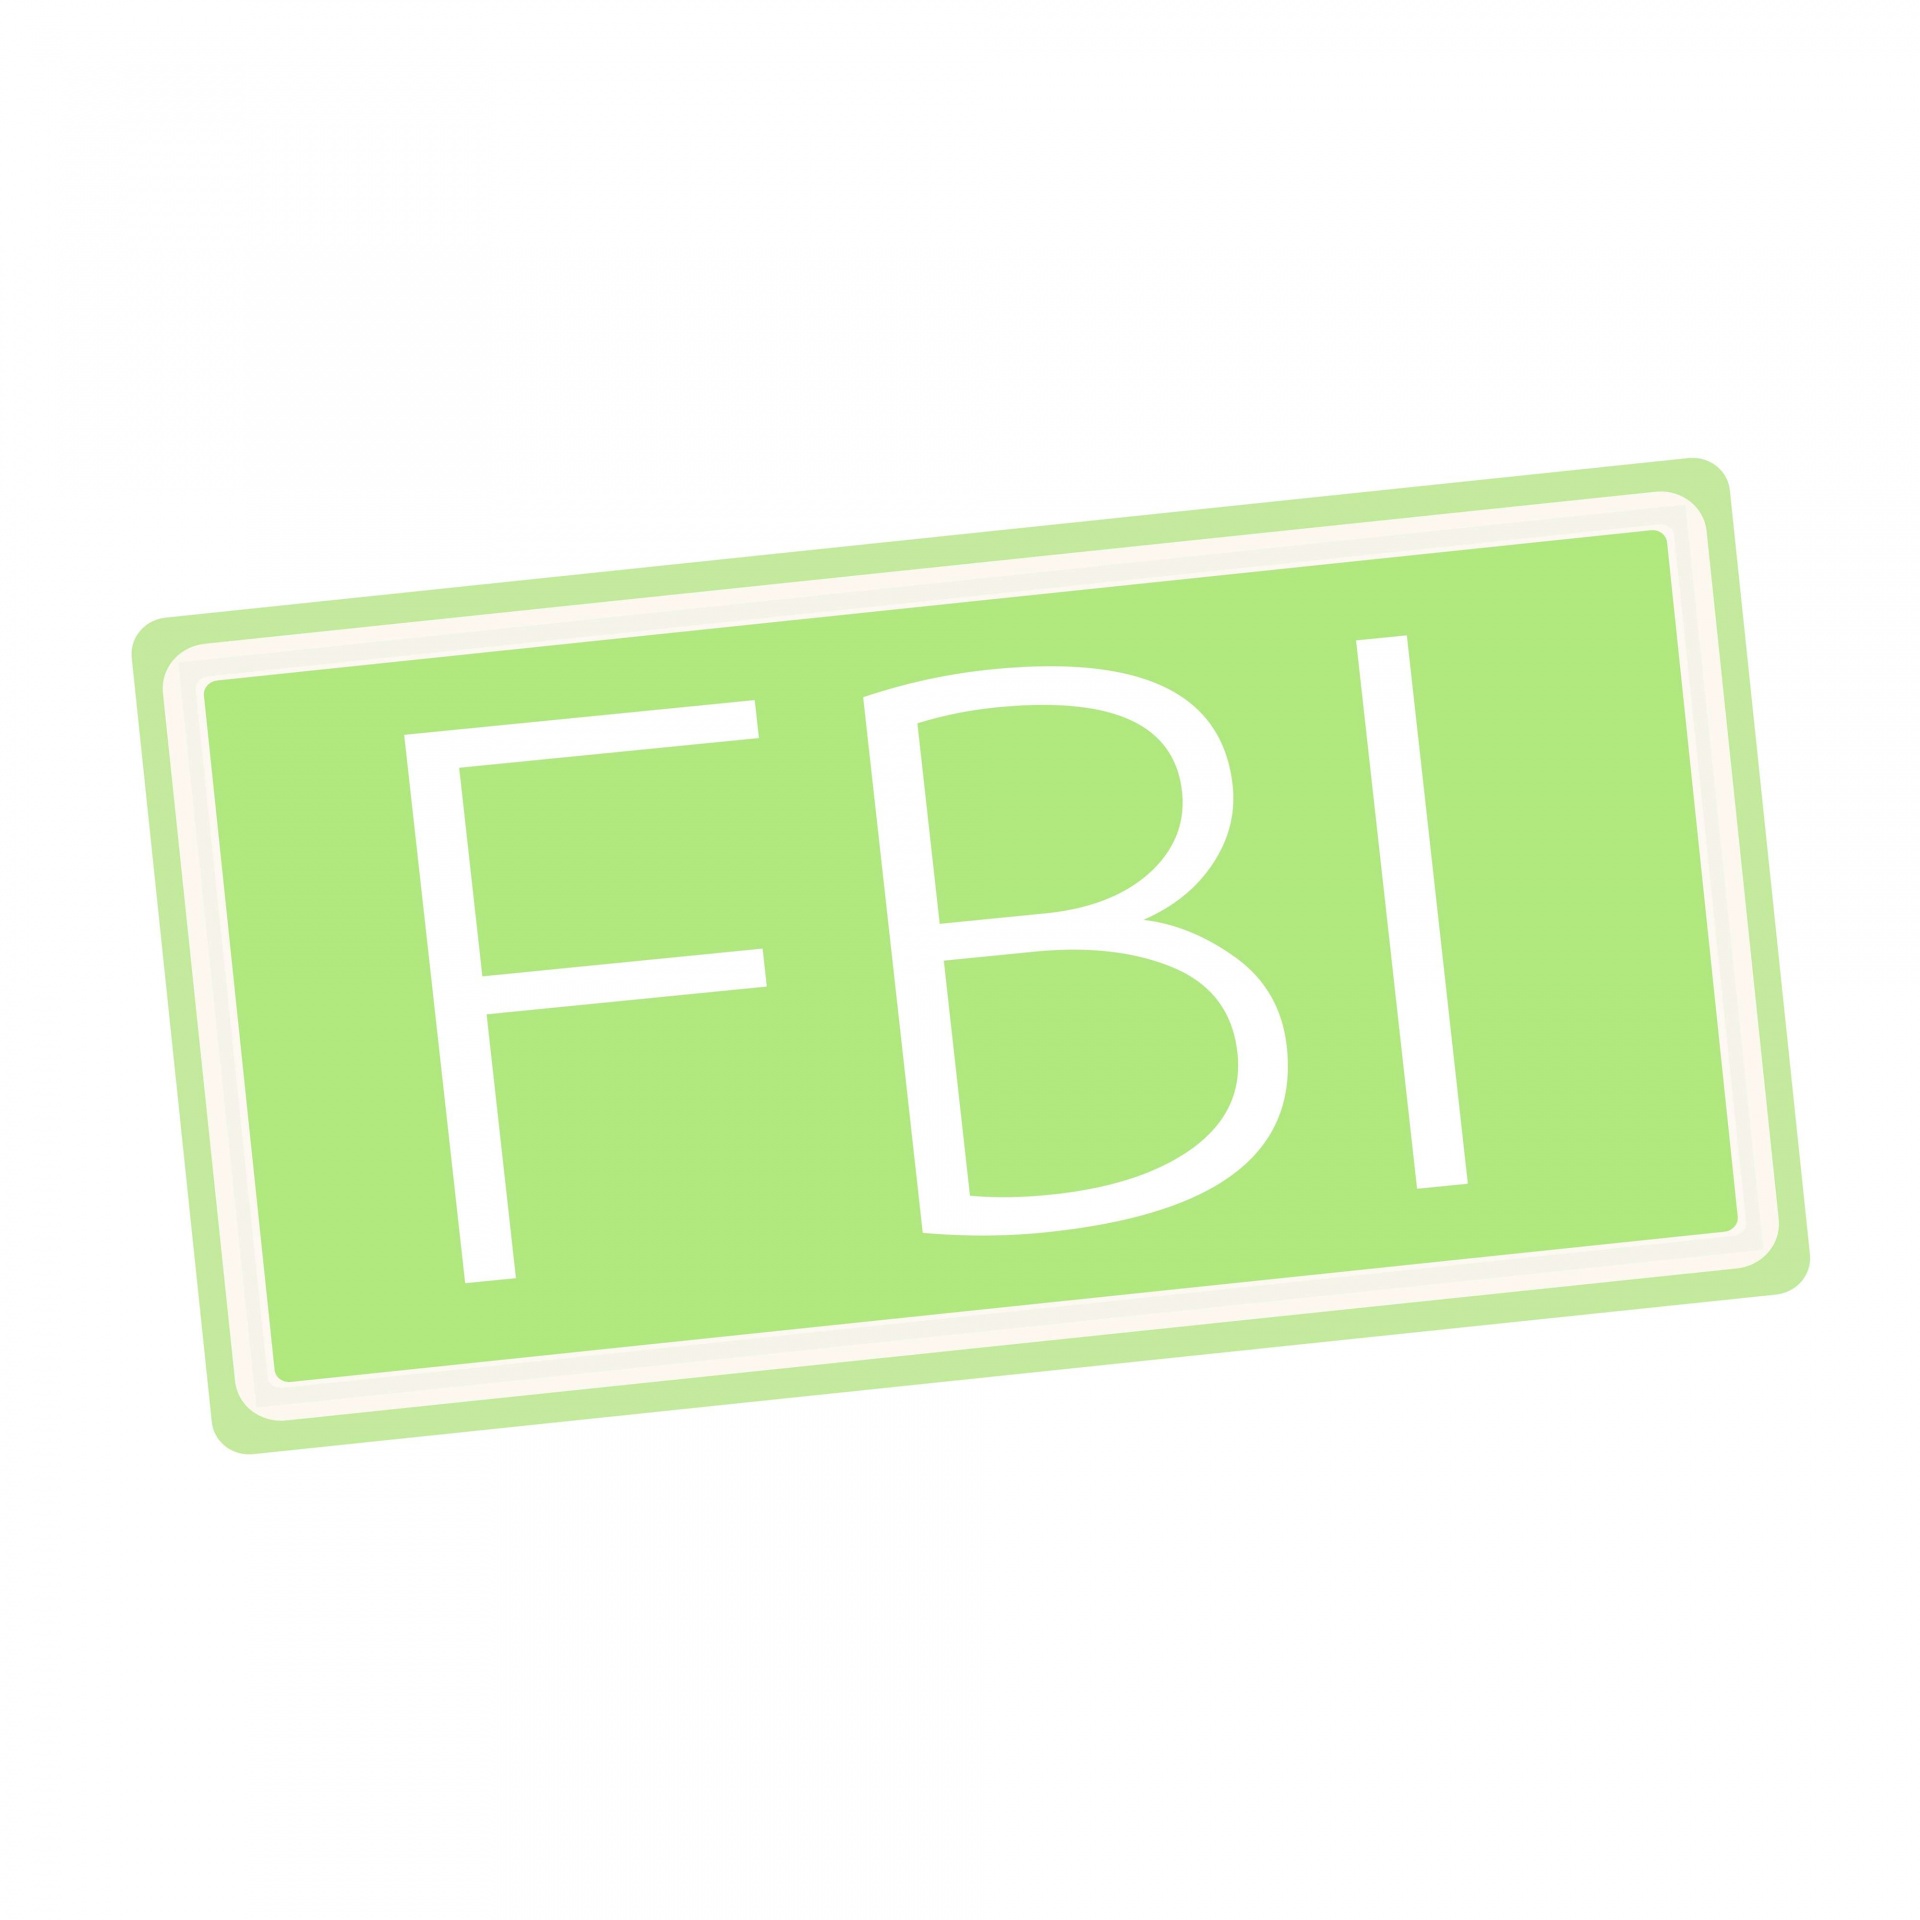 FBI White Stamp Text On Green